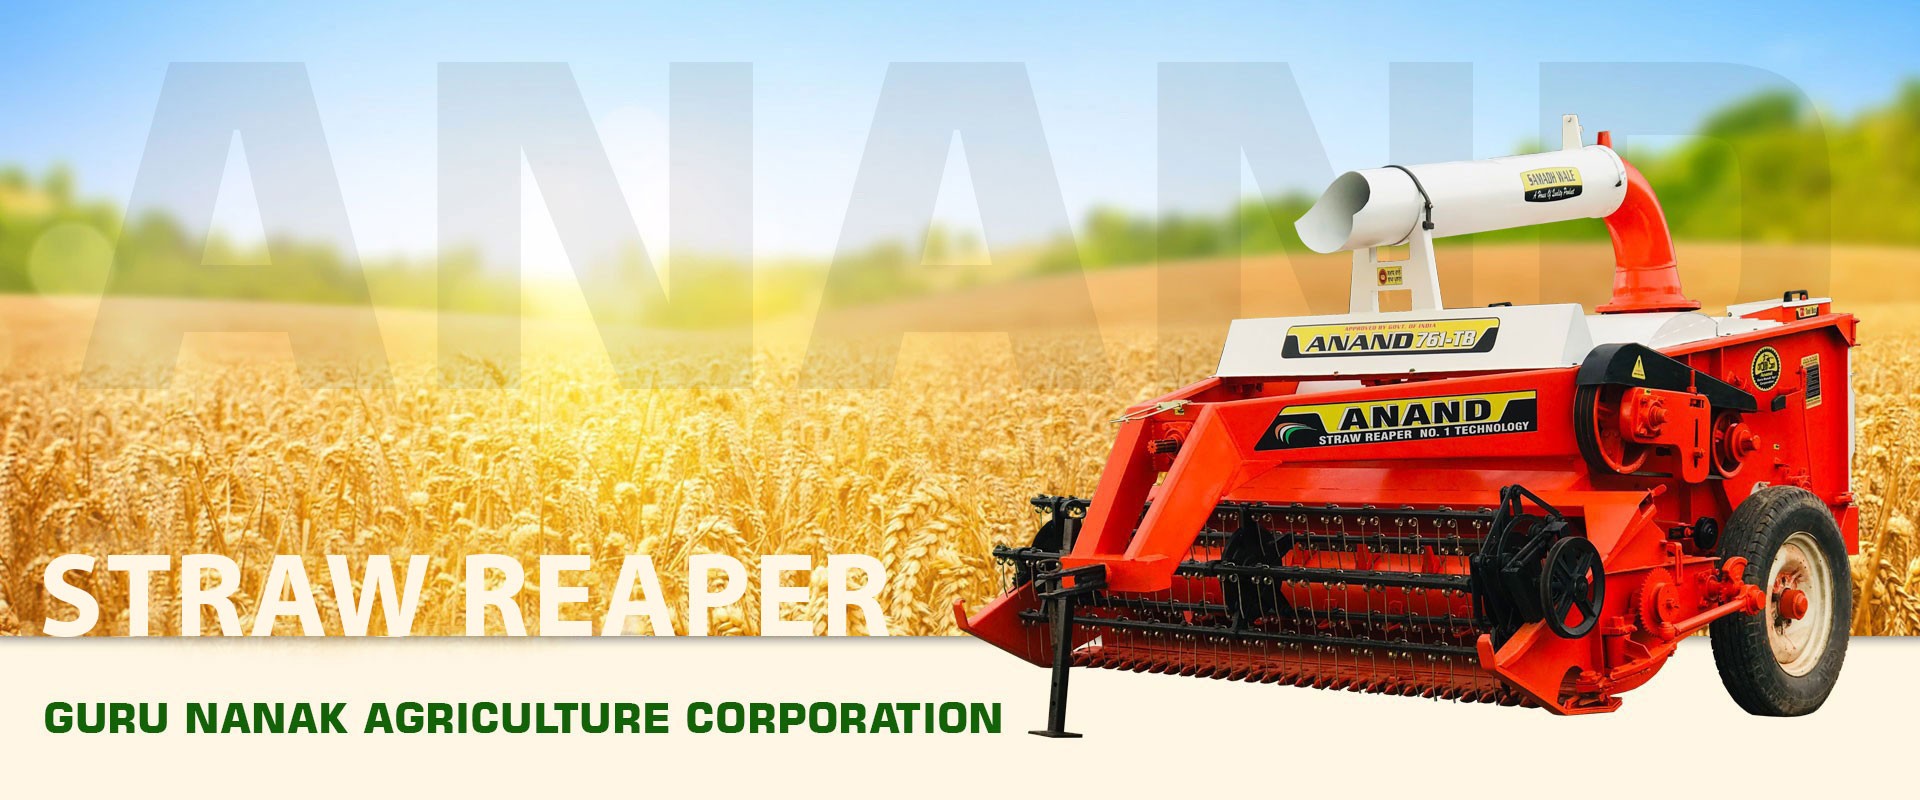 Straw Reaper Manufacturer and Supplier in Punjab India - Guru Nanak Agriculture Corporation